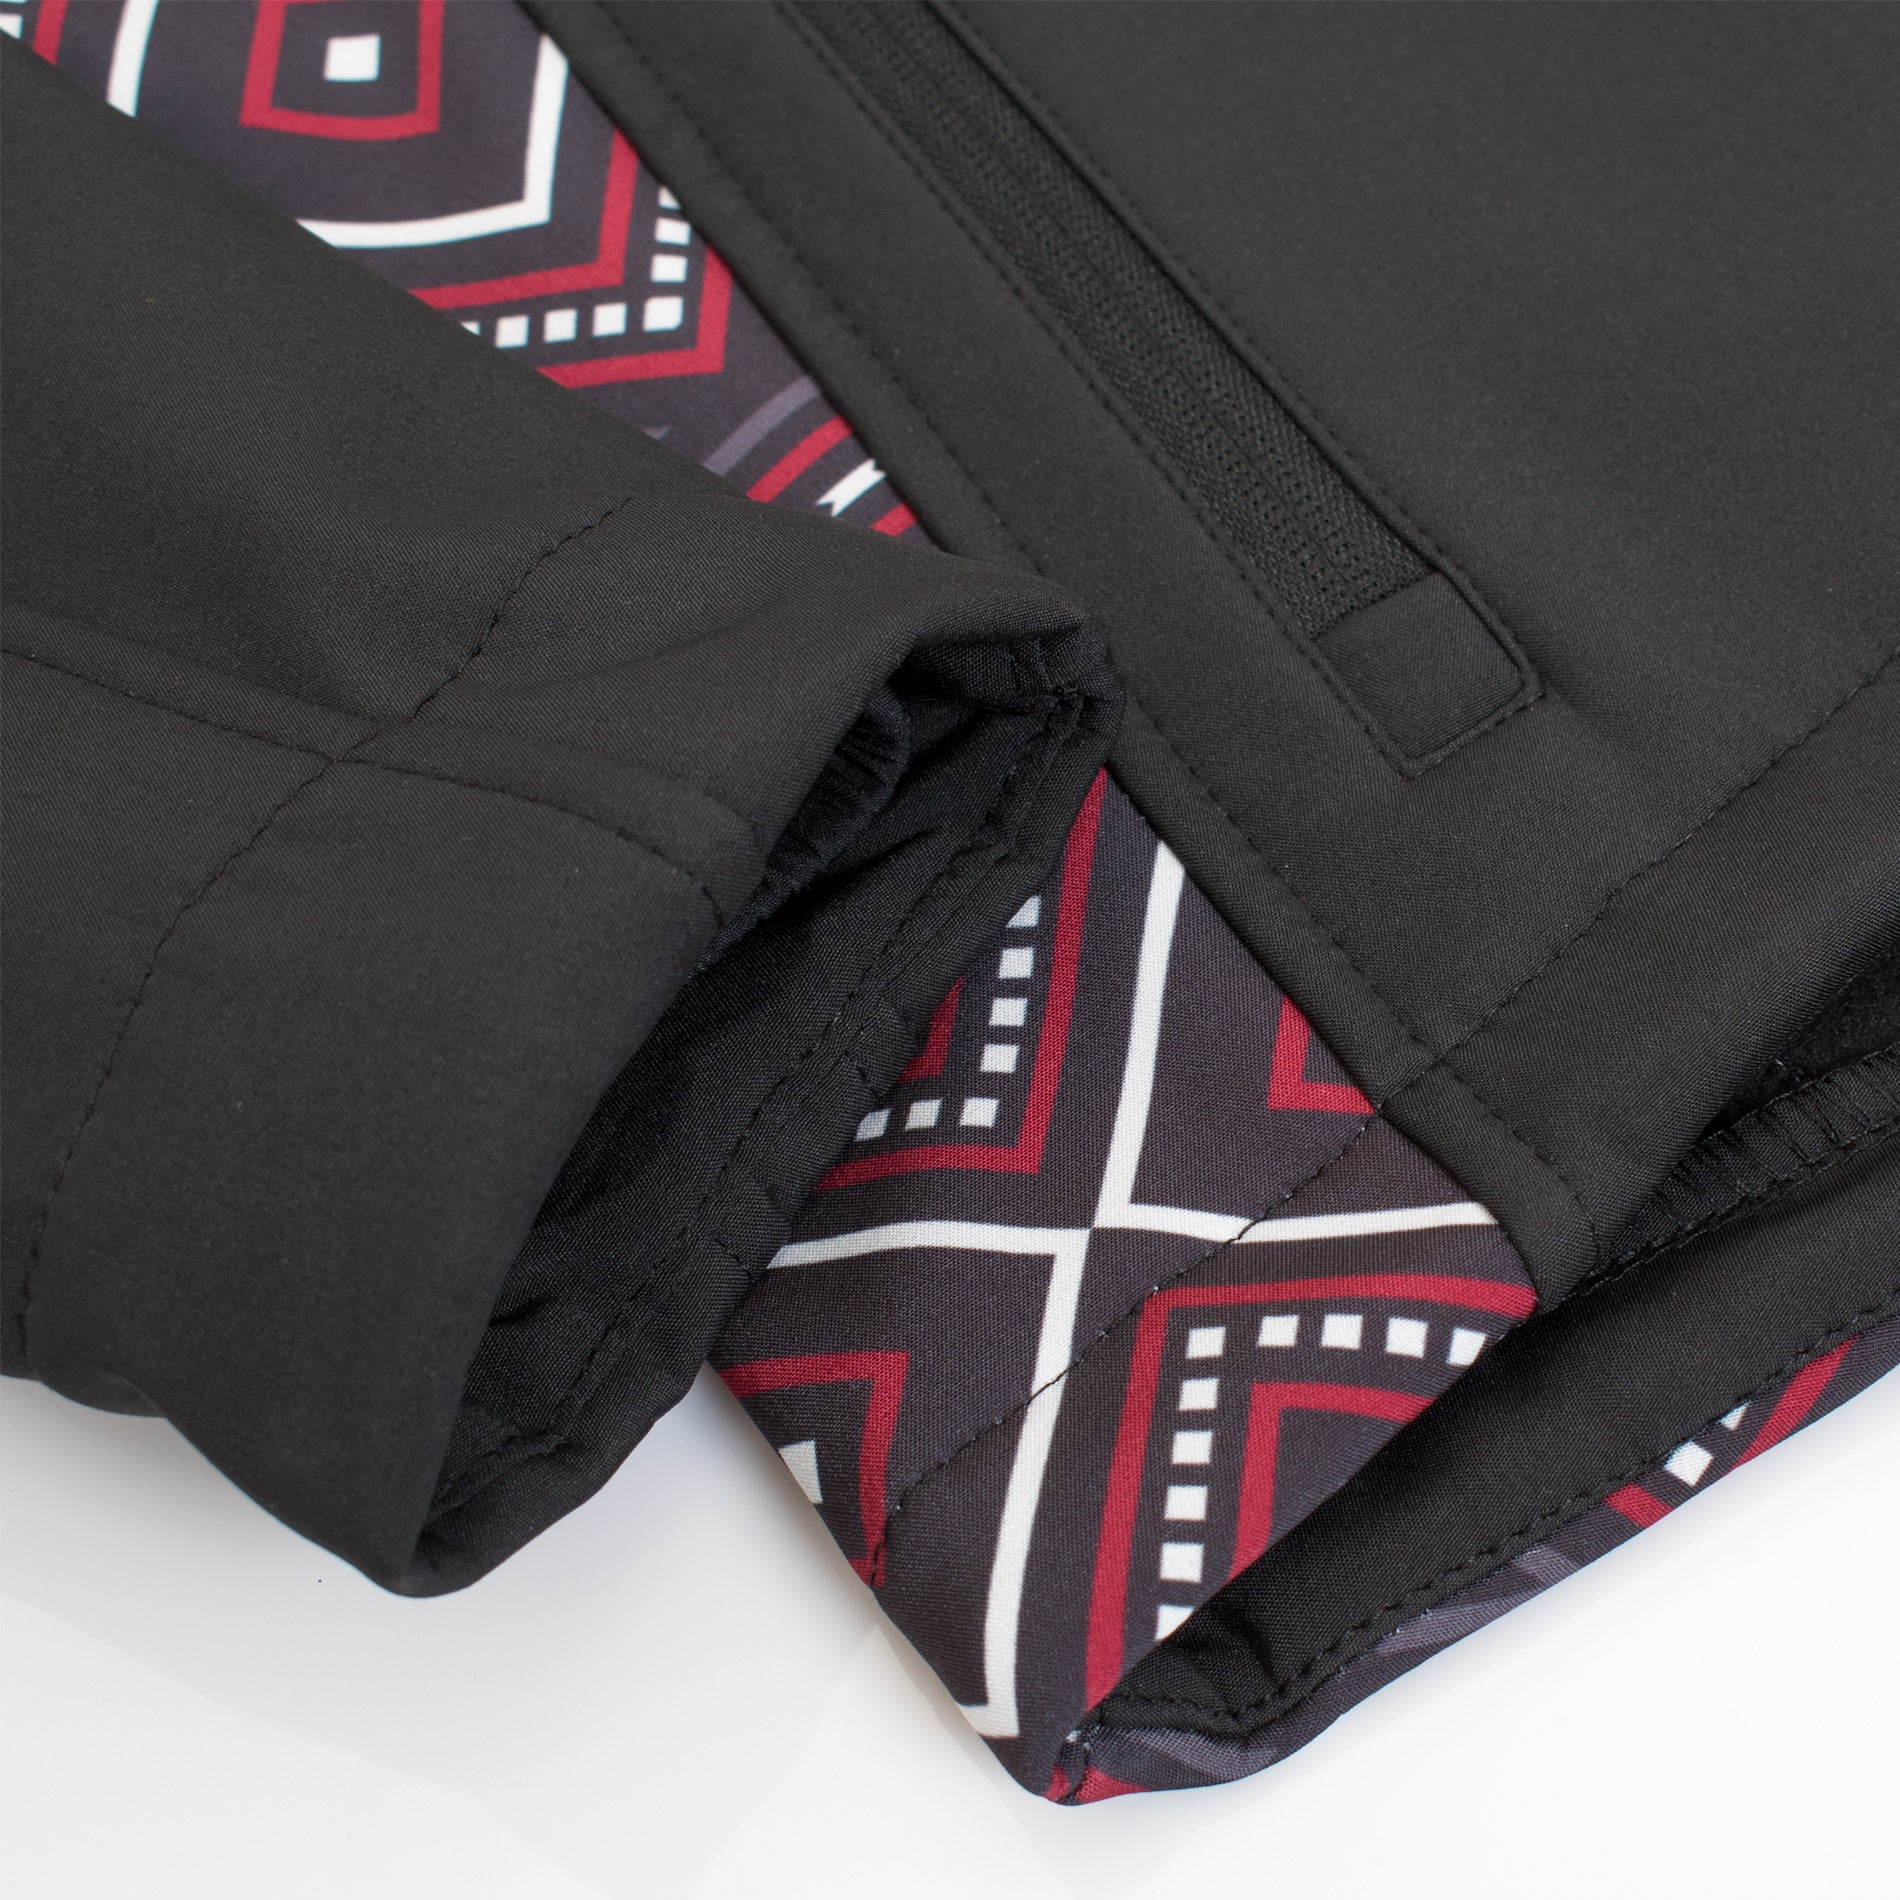 Women's Western Aztec Print Jacket -LJ650EMB-AZ-BLACK-RED